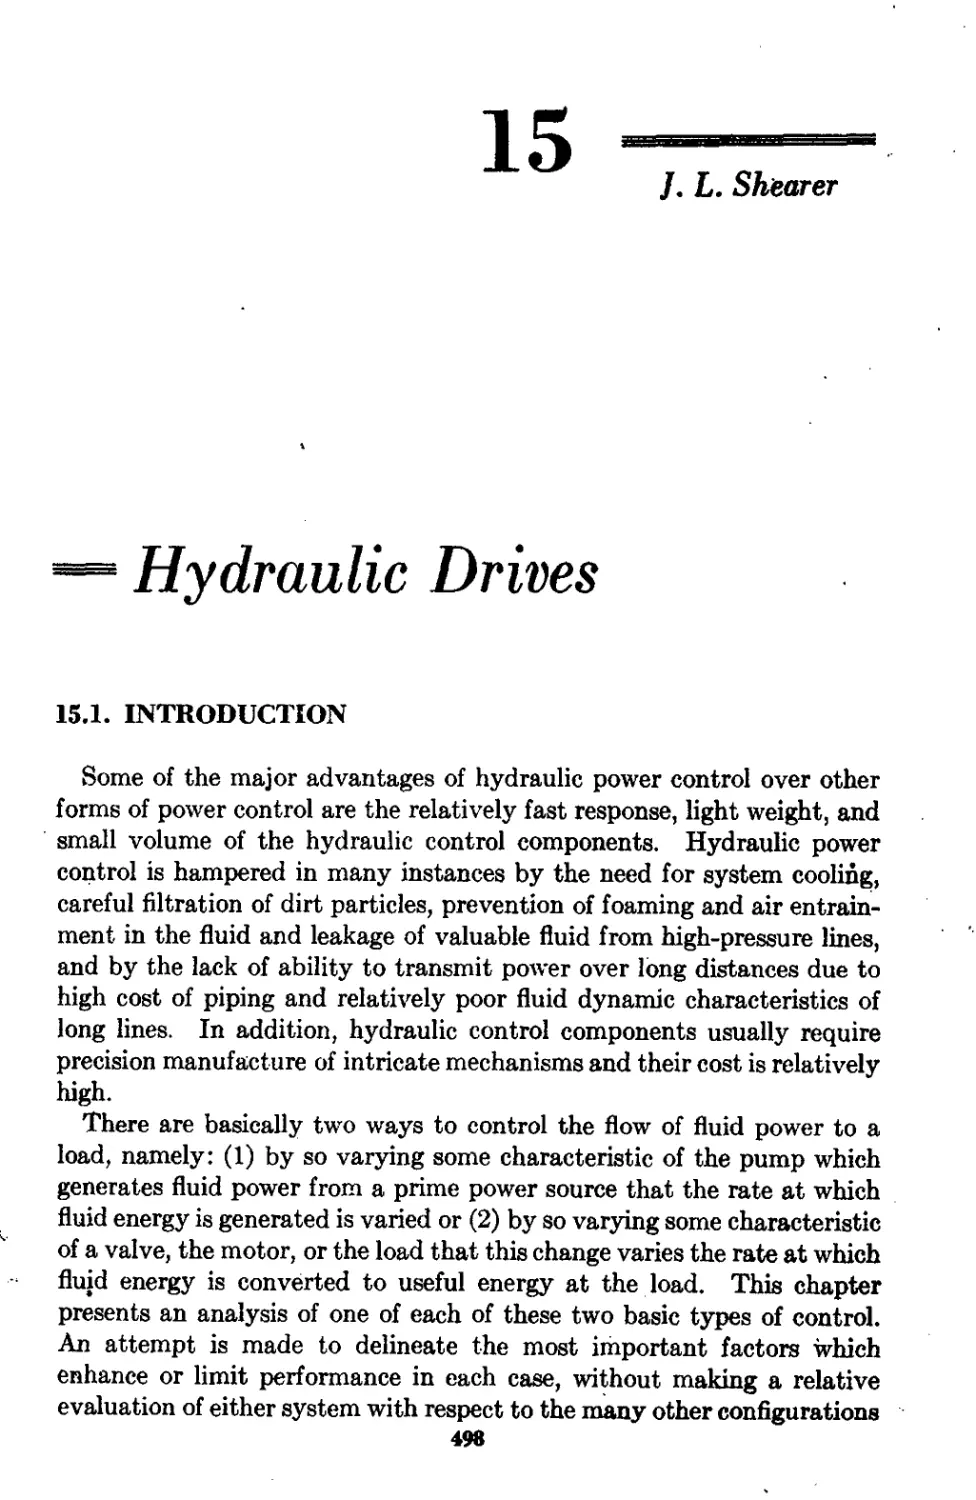 Chapter 15 Hydraulic Drives: J. L. Shearer